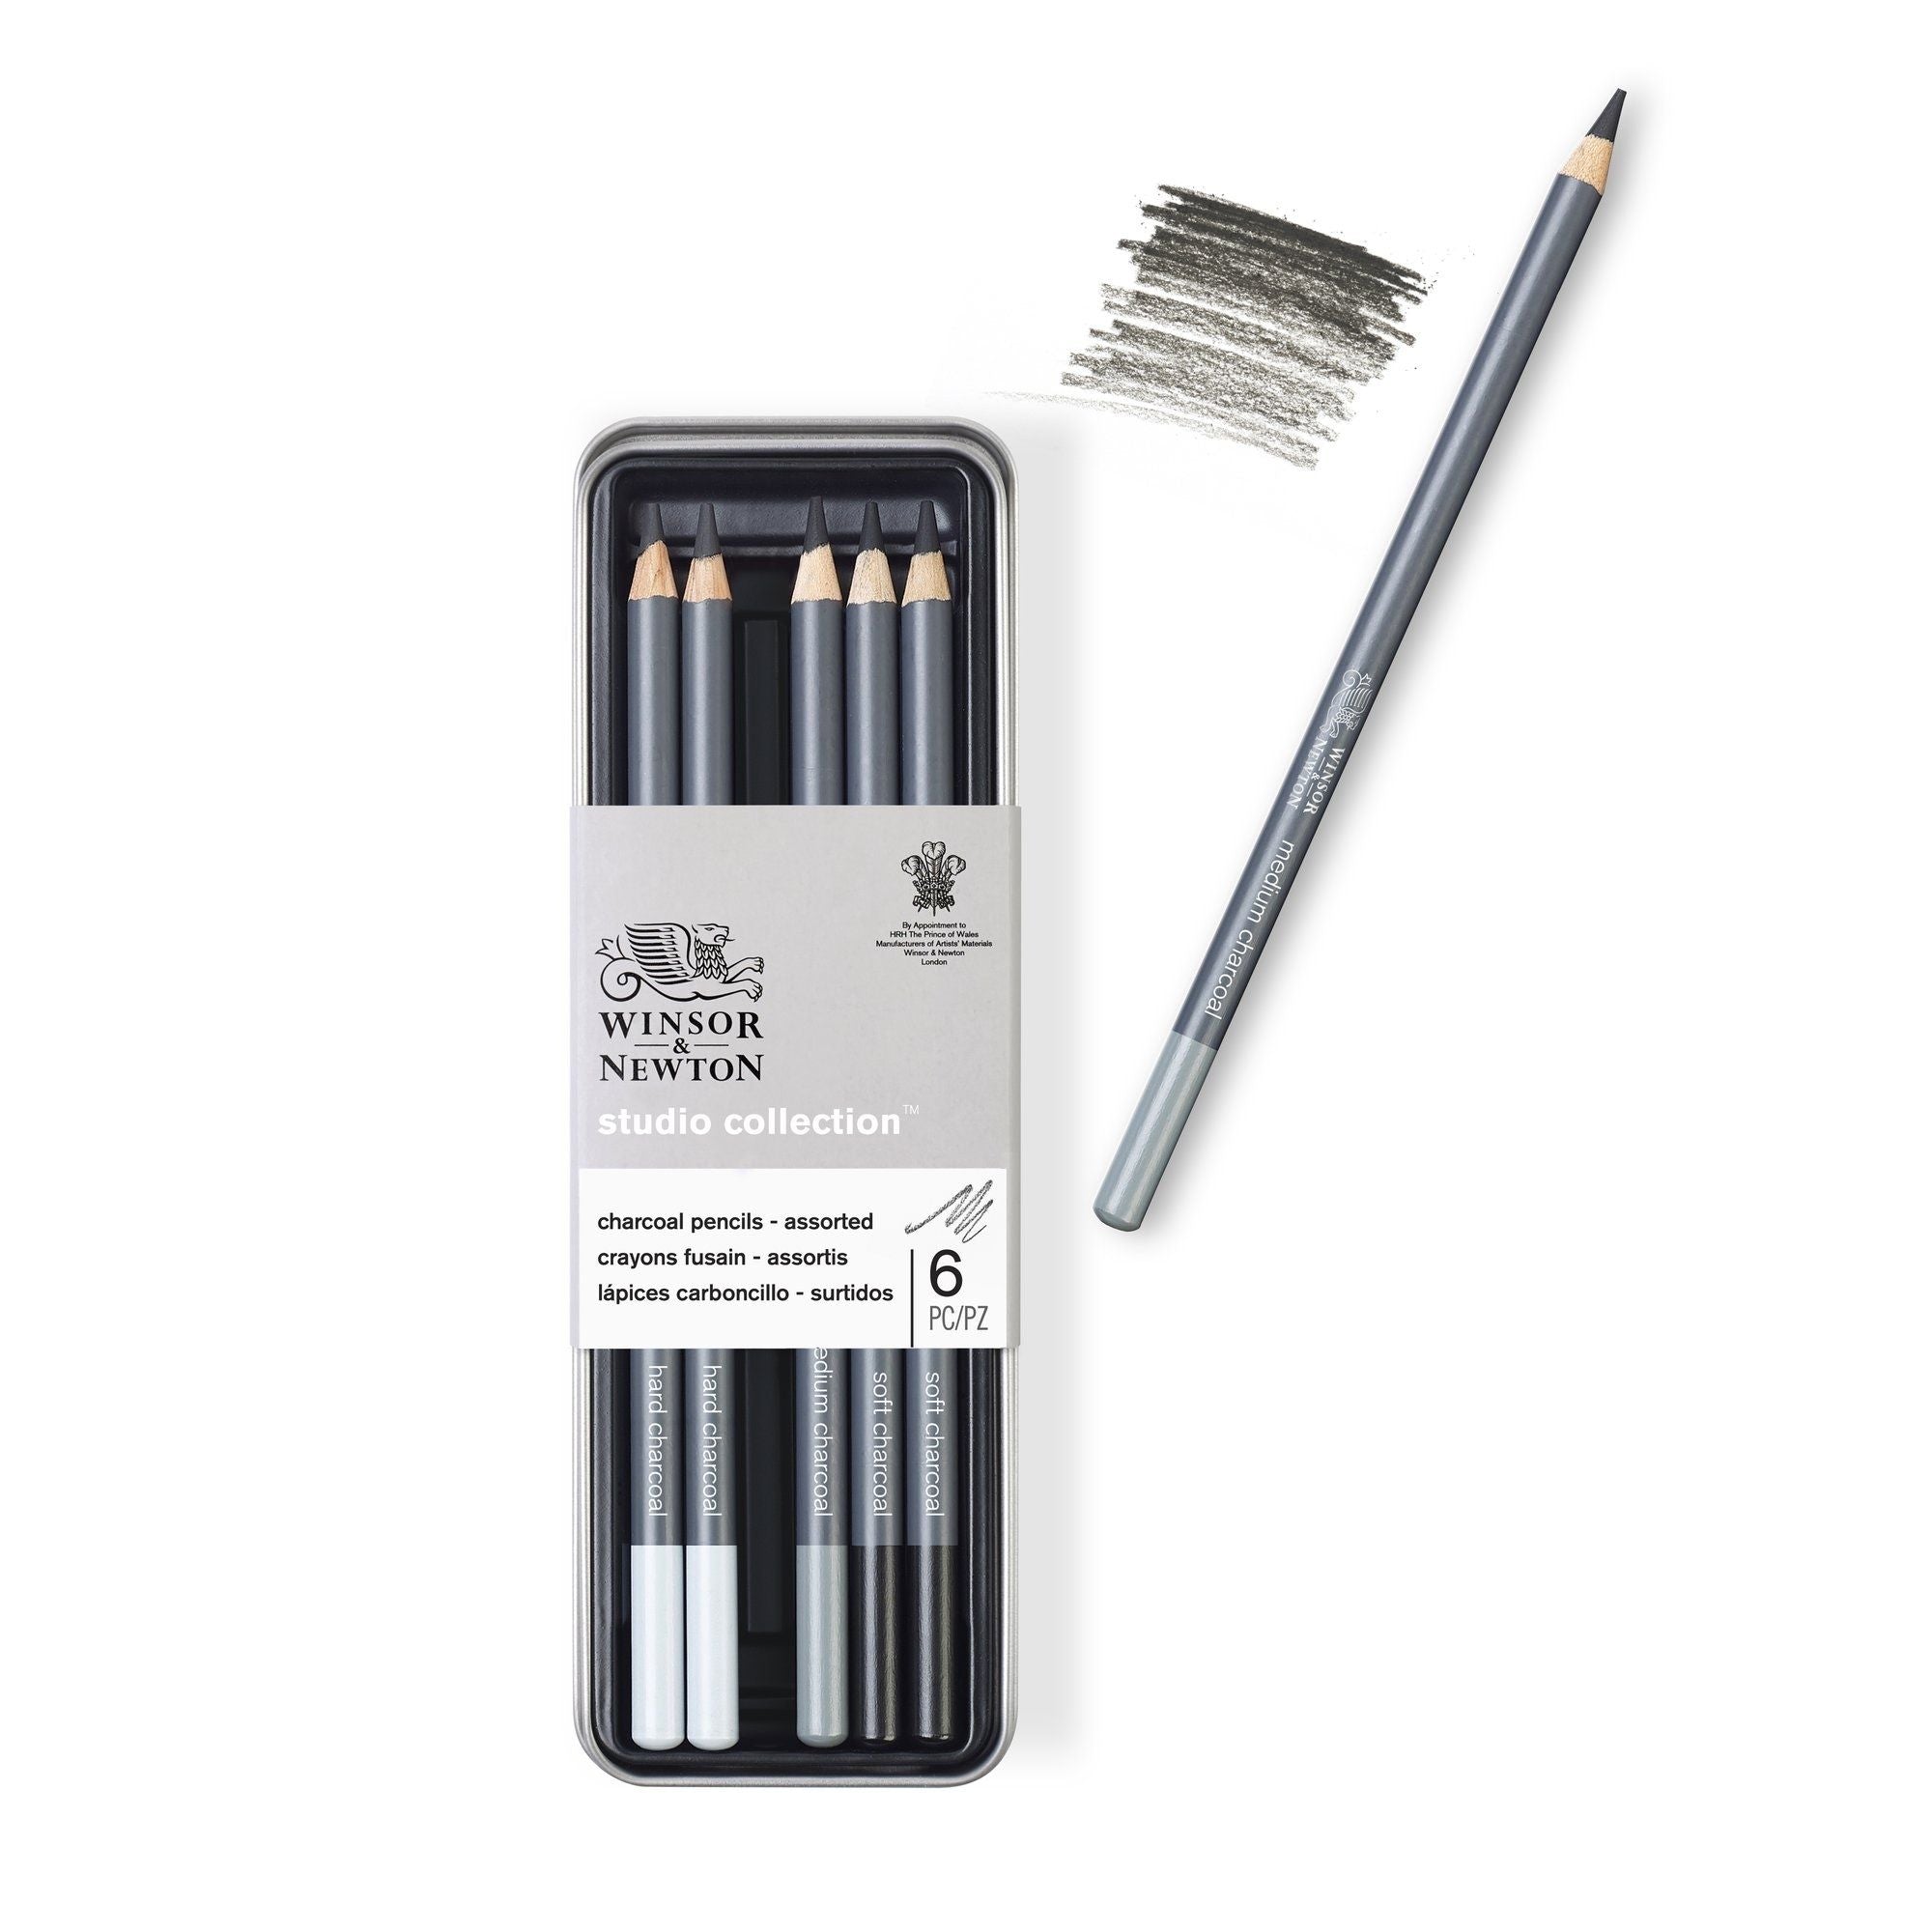 Winsor & Newton Studio Collection Charcoal pencils - 6 Tin set